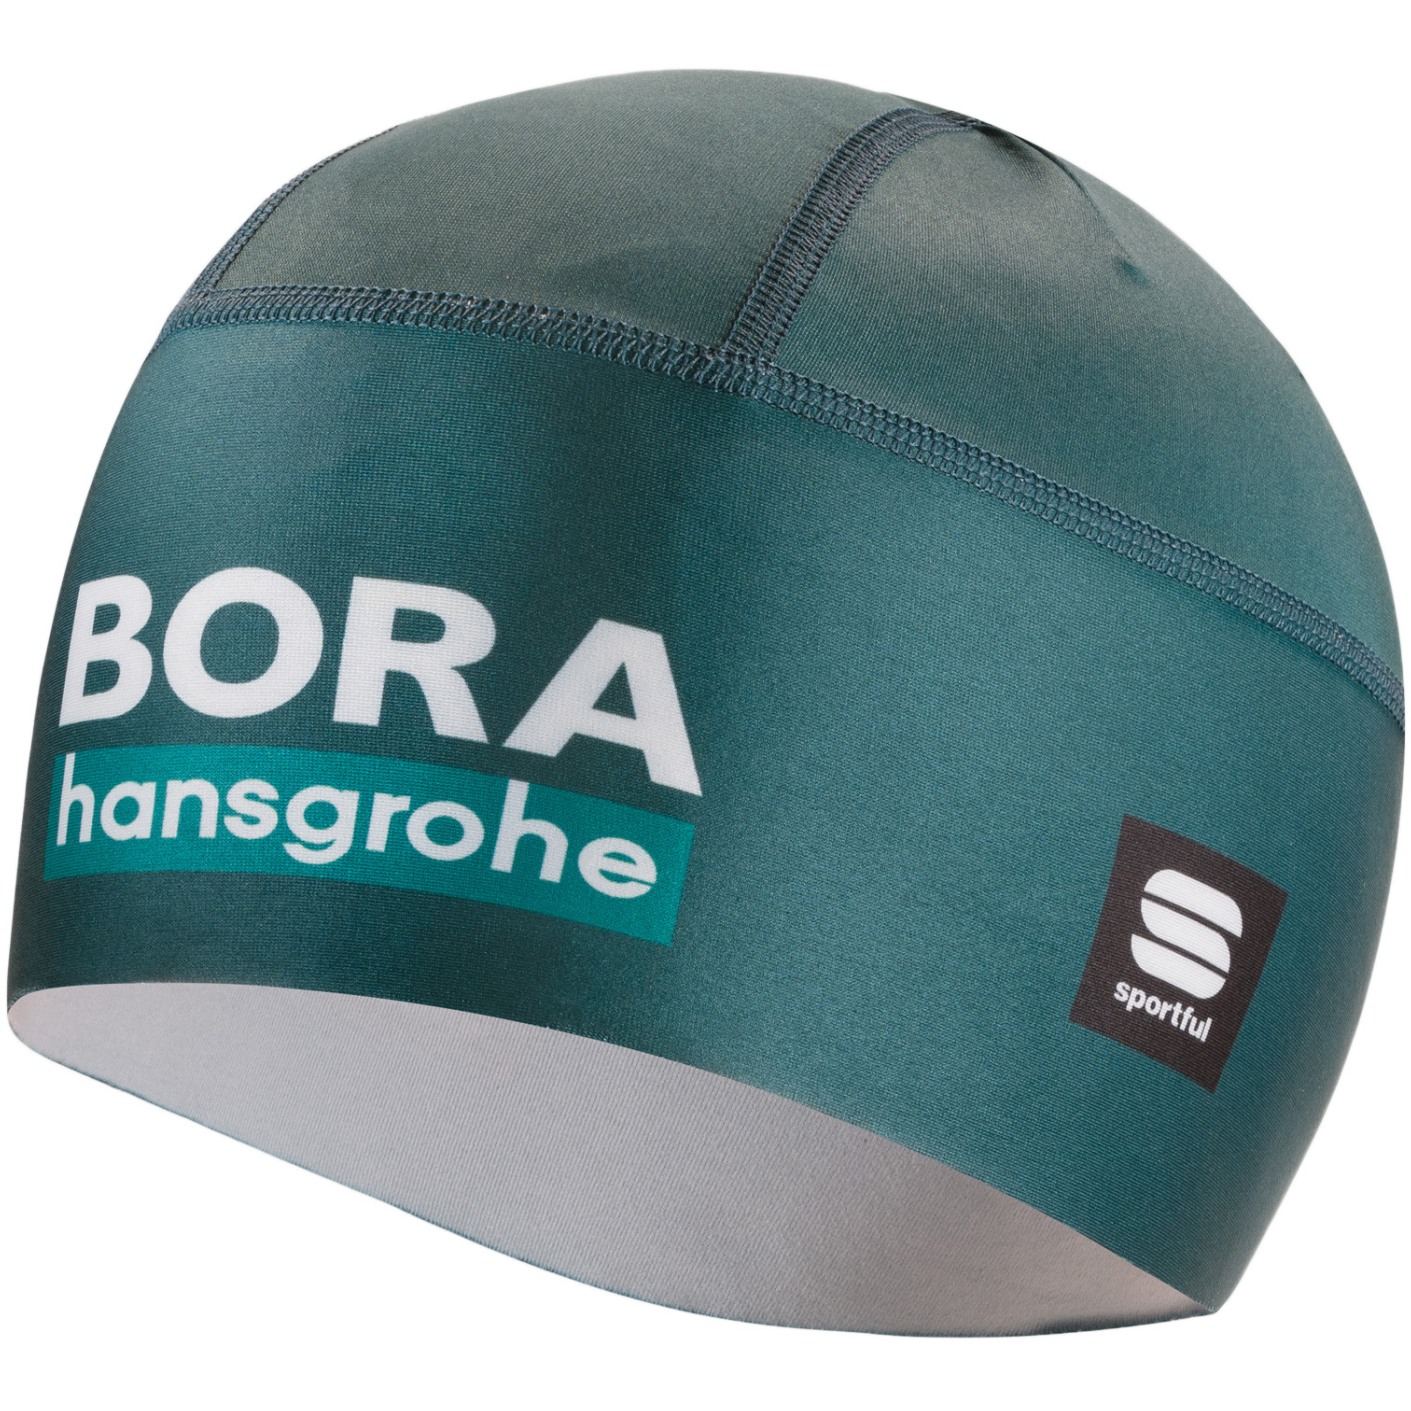 Productfoto van Sportful BORA-hansgrohe Onderhelm - 329 Sea Moss